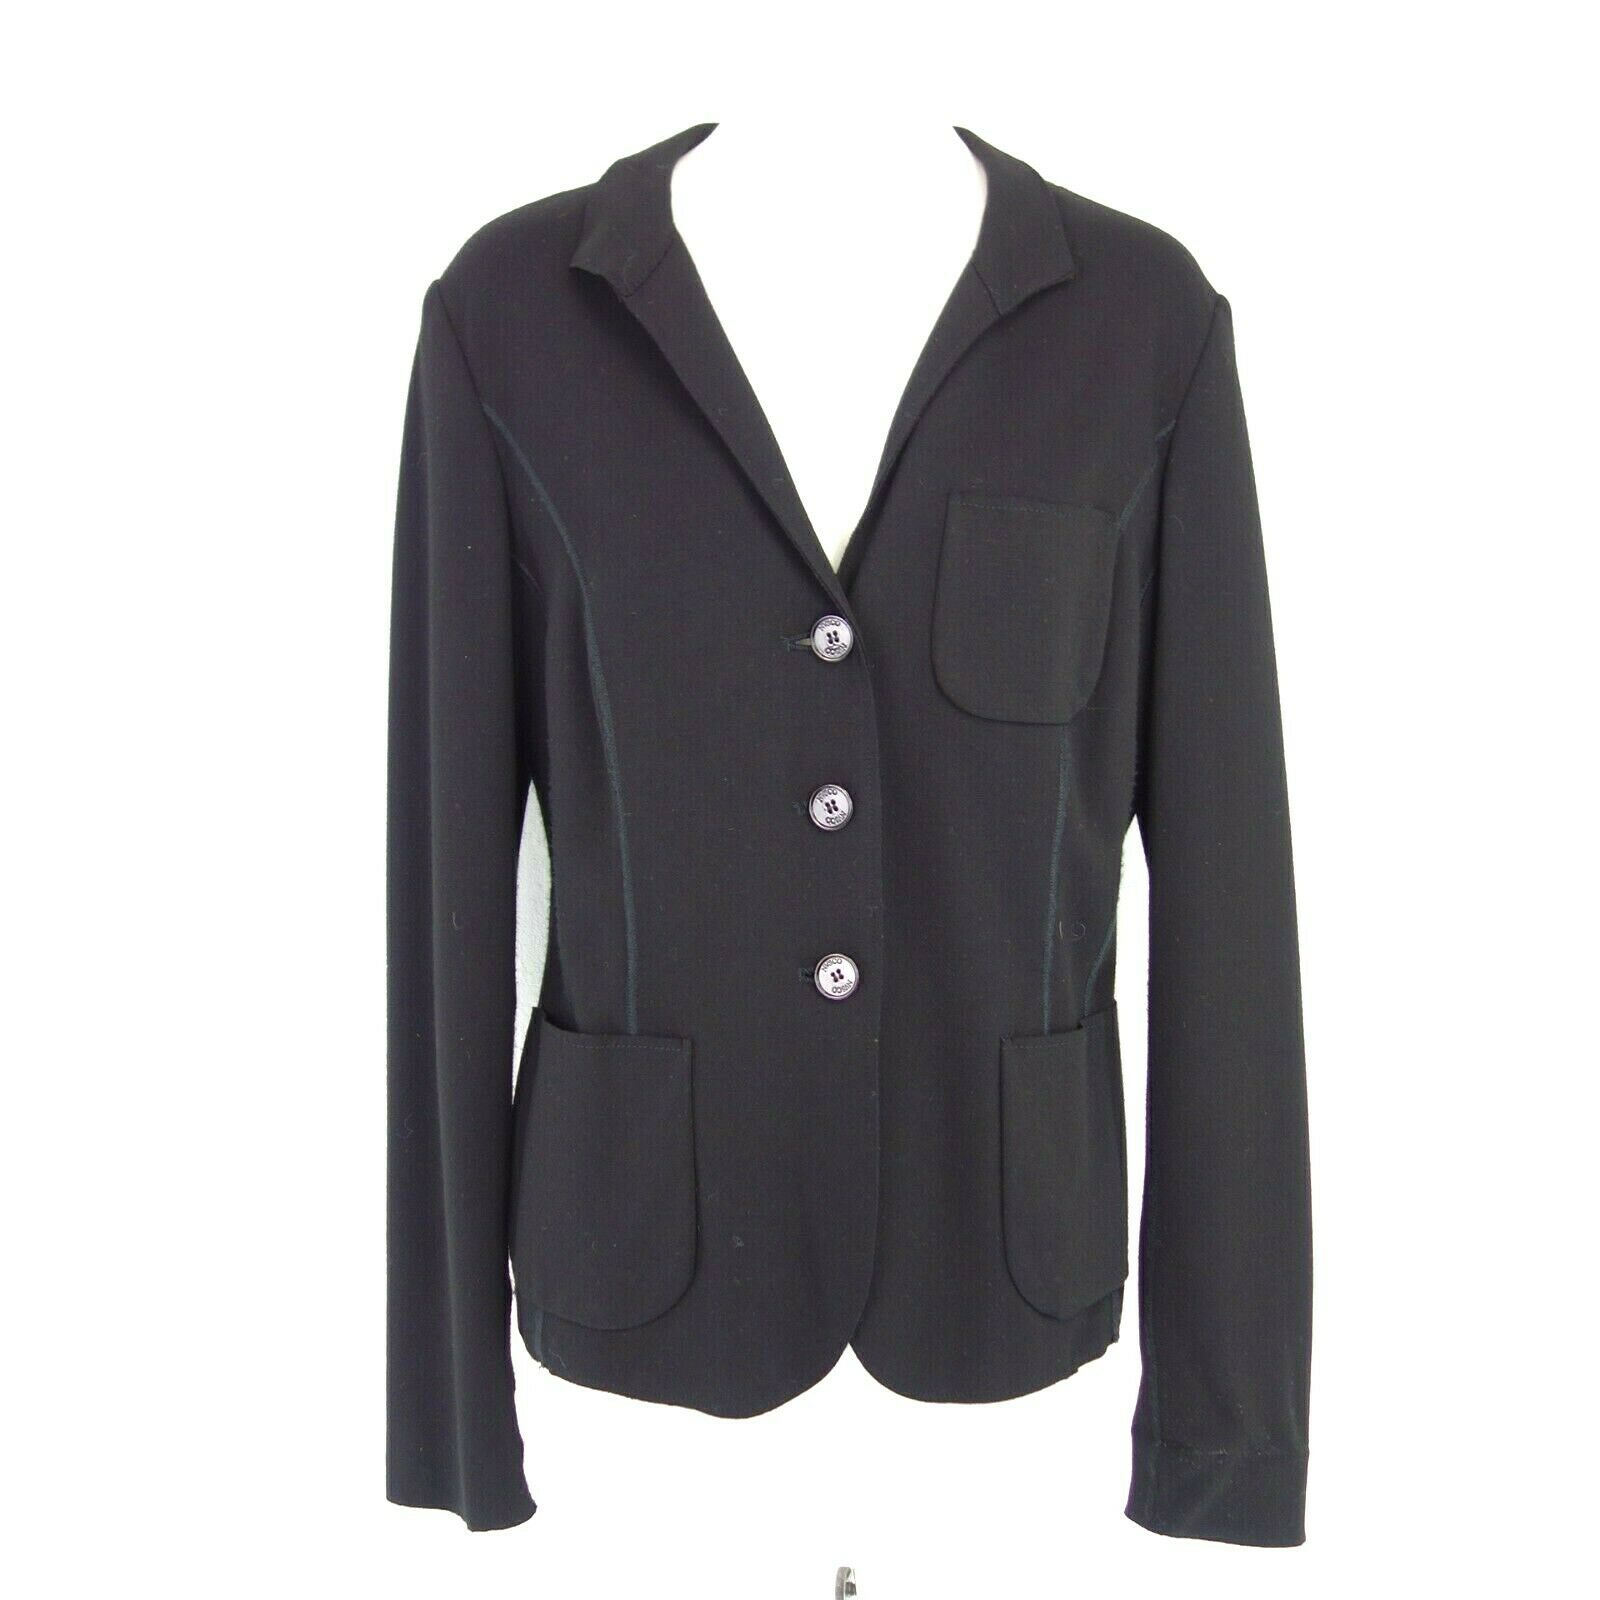 NVSCO Damen Jersey Blazer Jacke Größe 38 M Schwarz Sportlich Elegant Np 249 Neu